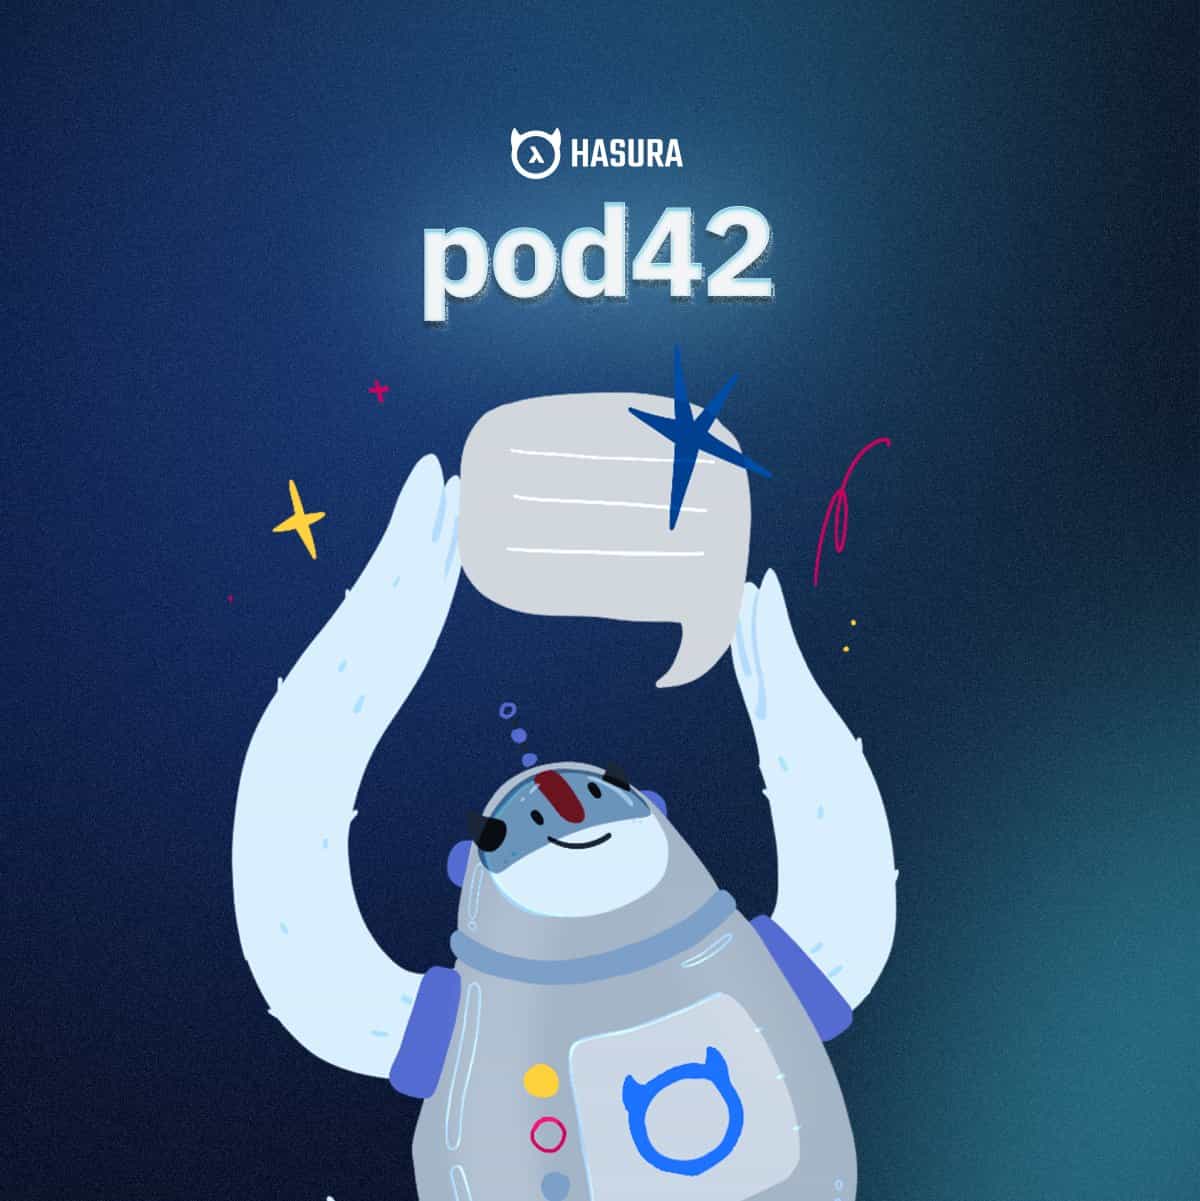 Announcing Pod42, the Hasura ChatGPT Bot